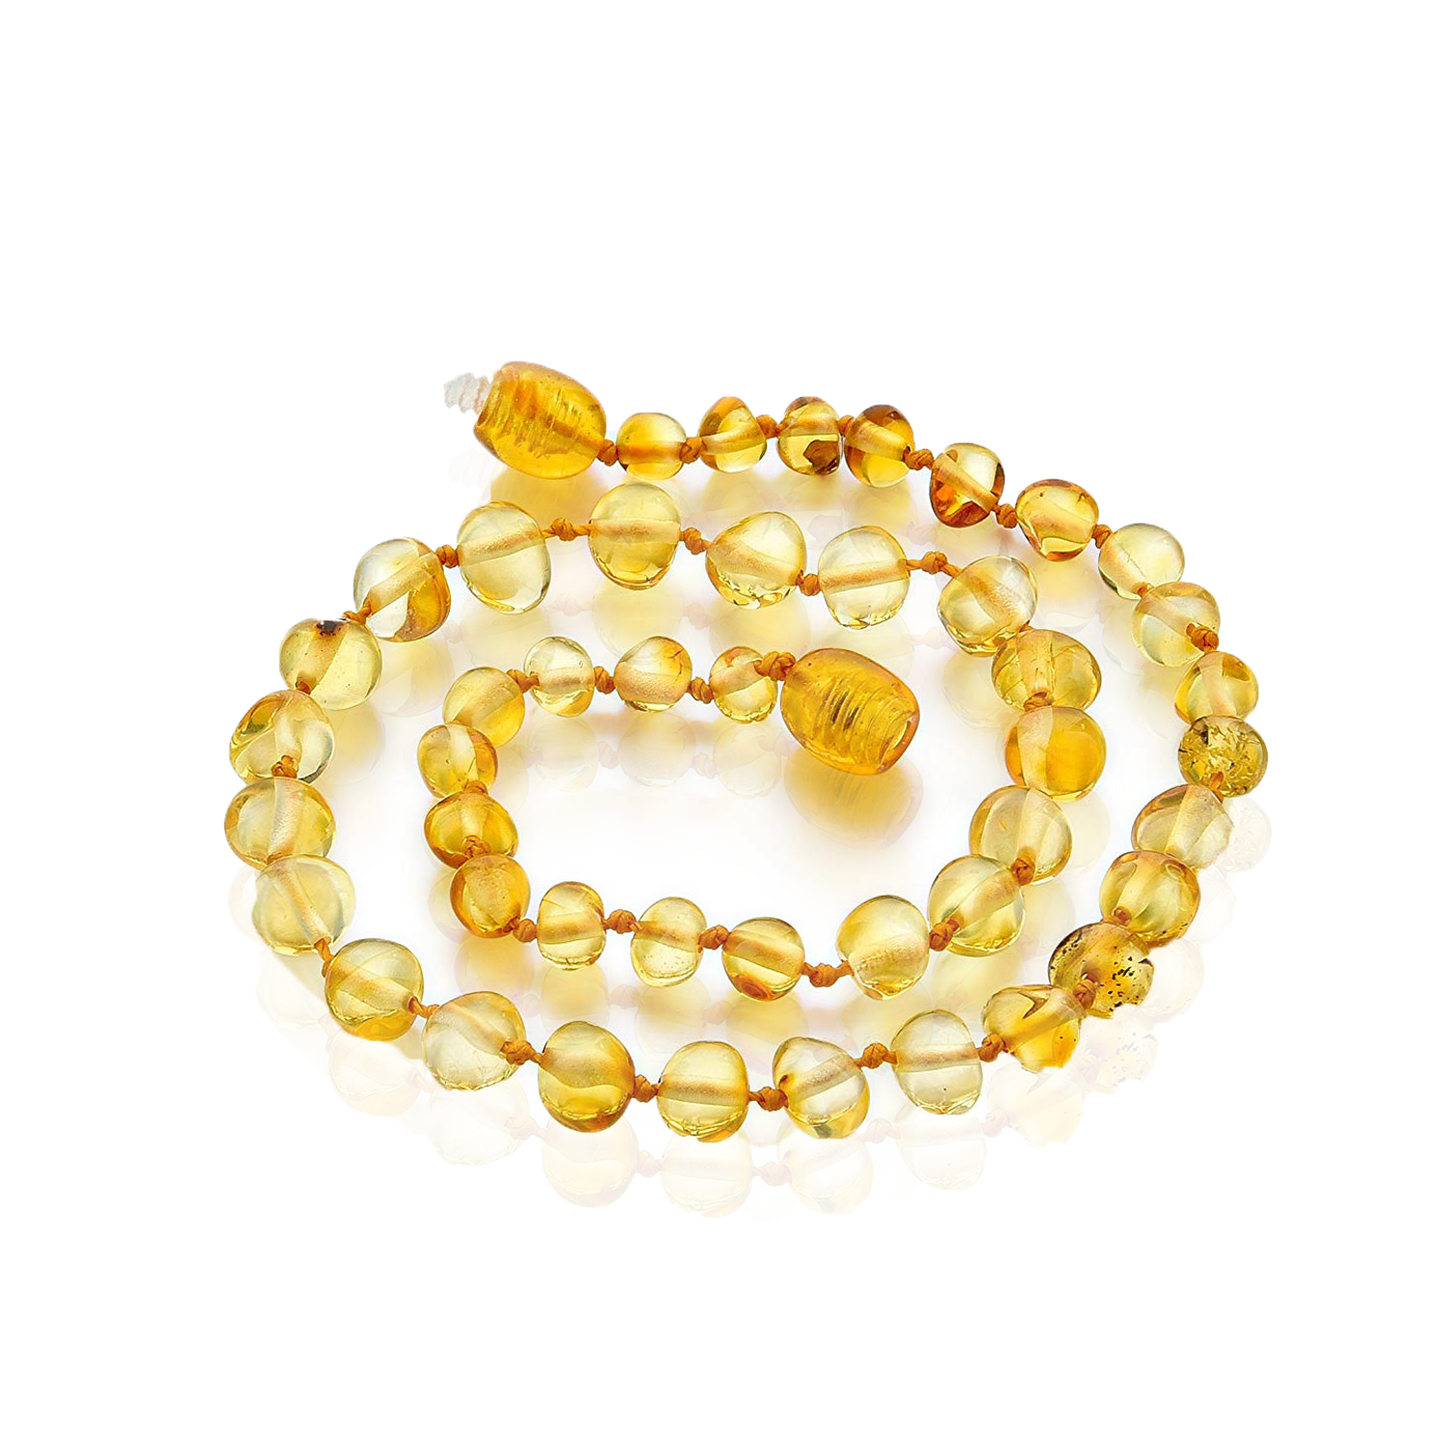 Transparent children's amber necklace